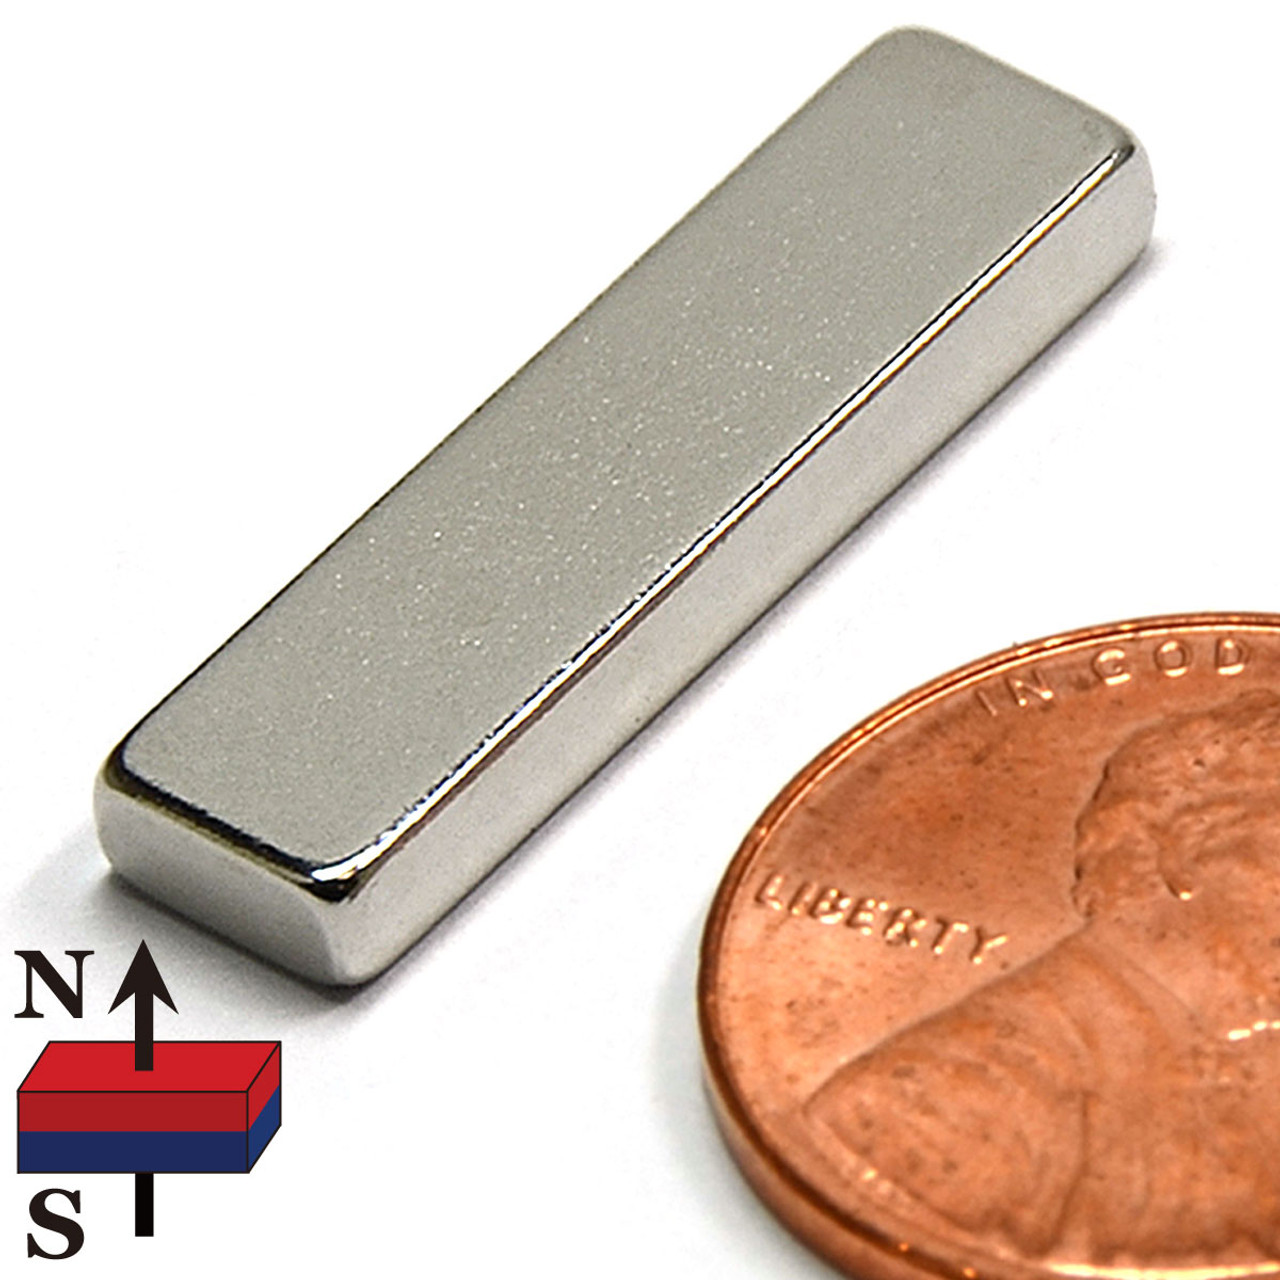 1"x1/4"x1/8" NdFeB Rare Earth Magnets